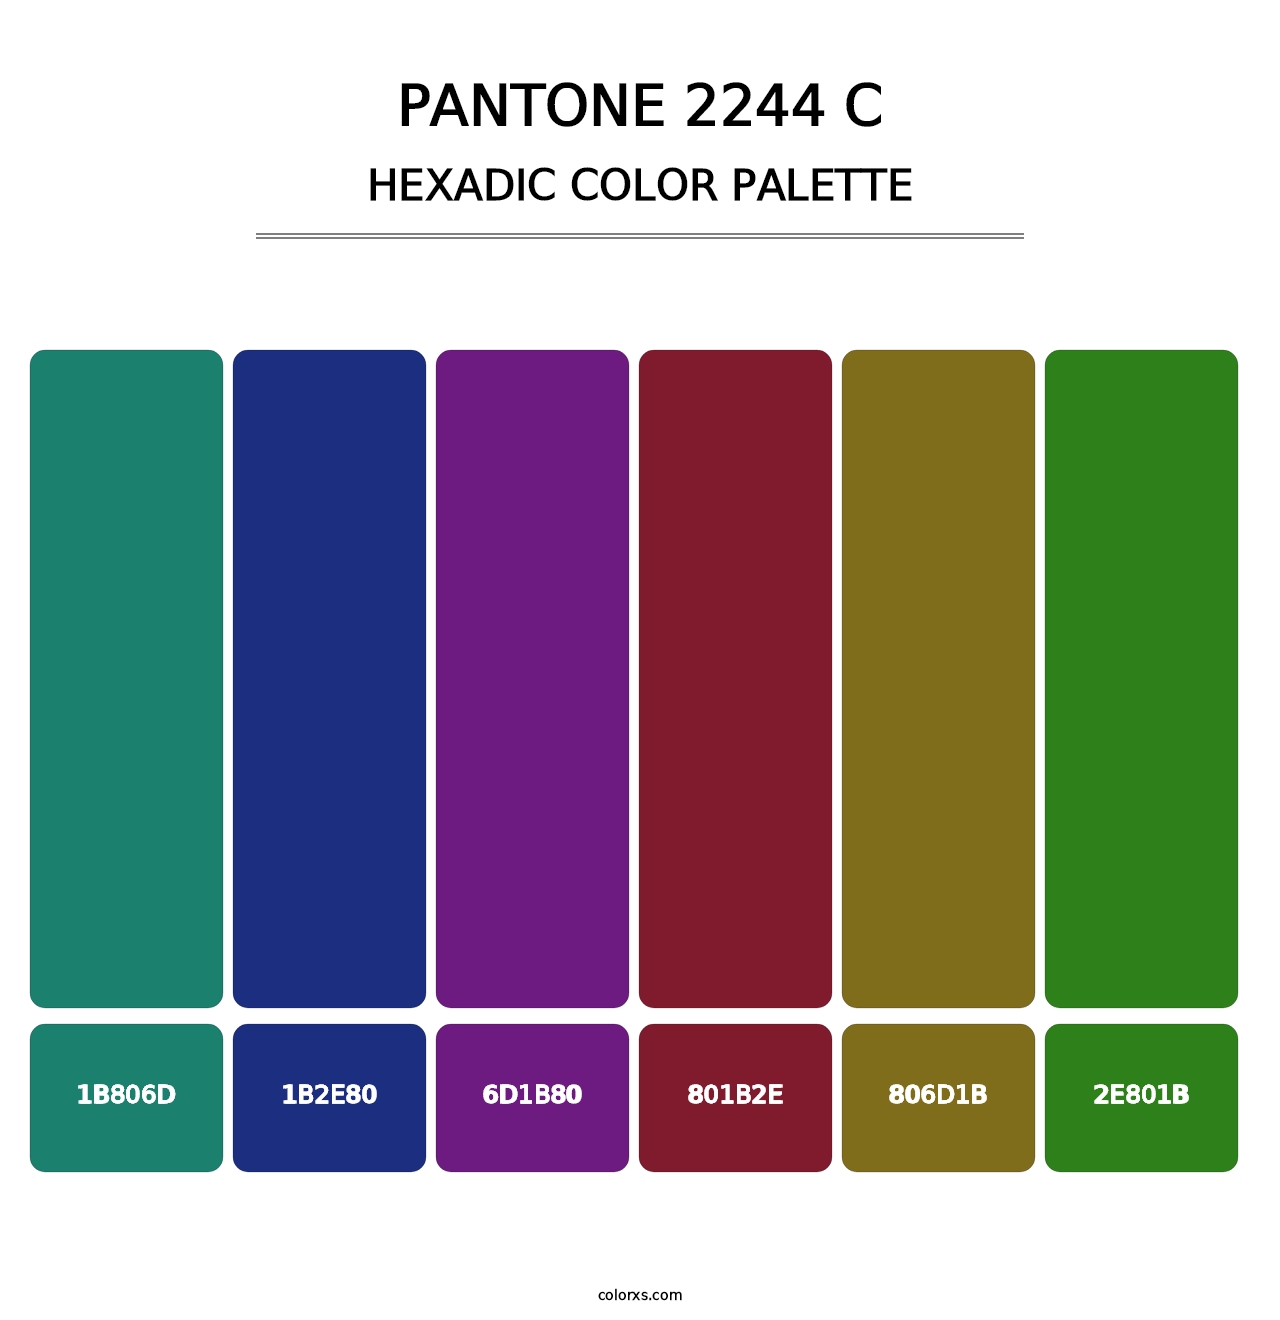 PANTONE 2244 C - Hexadic Color Palette